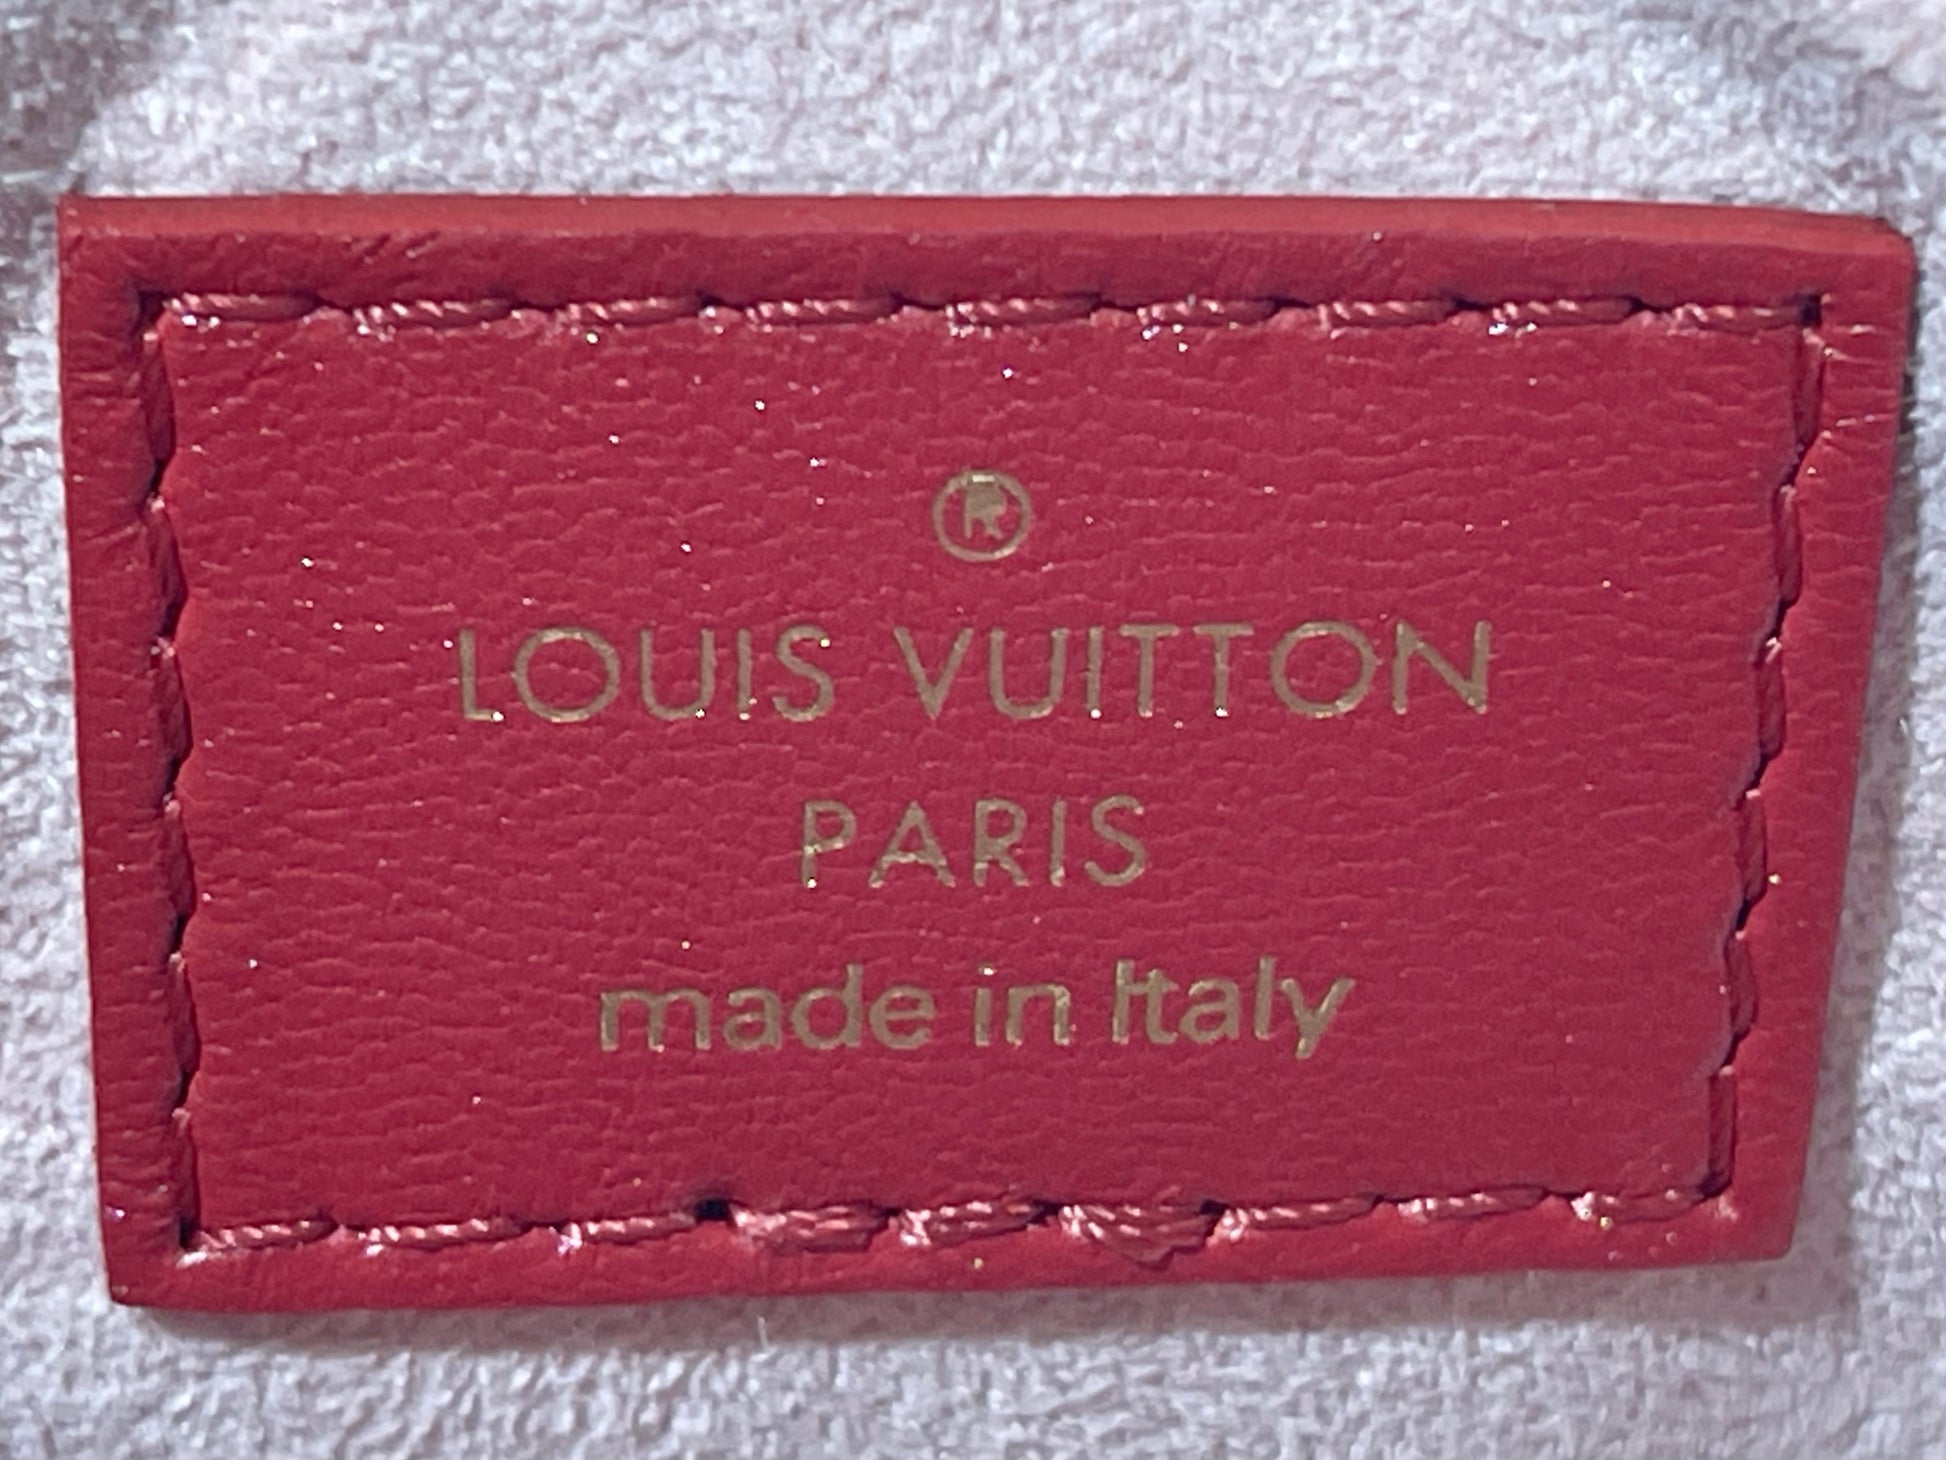 Louis Vuitton Fall in Love Embossed Lambskin Sac Coeur Heartbox in